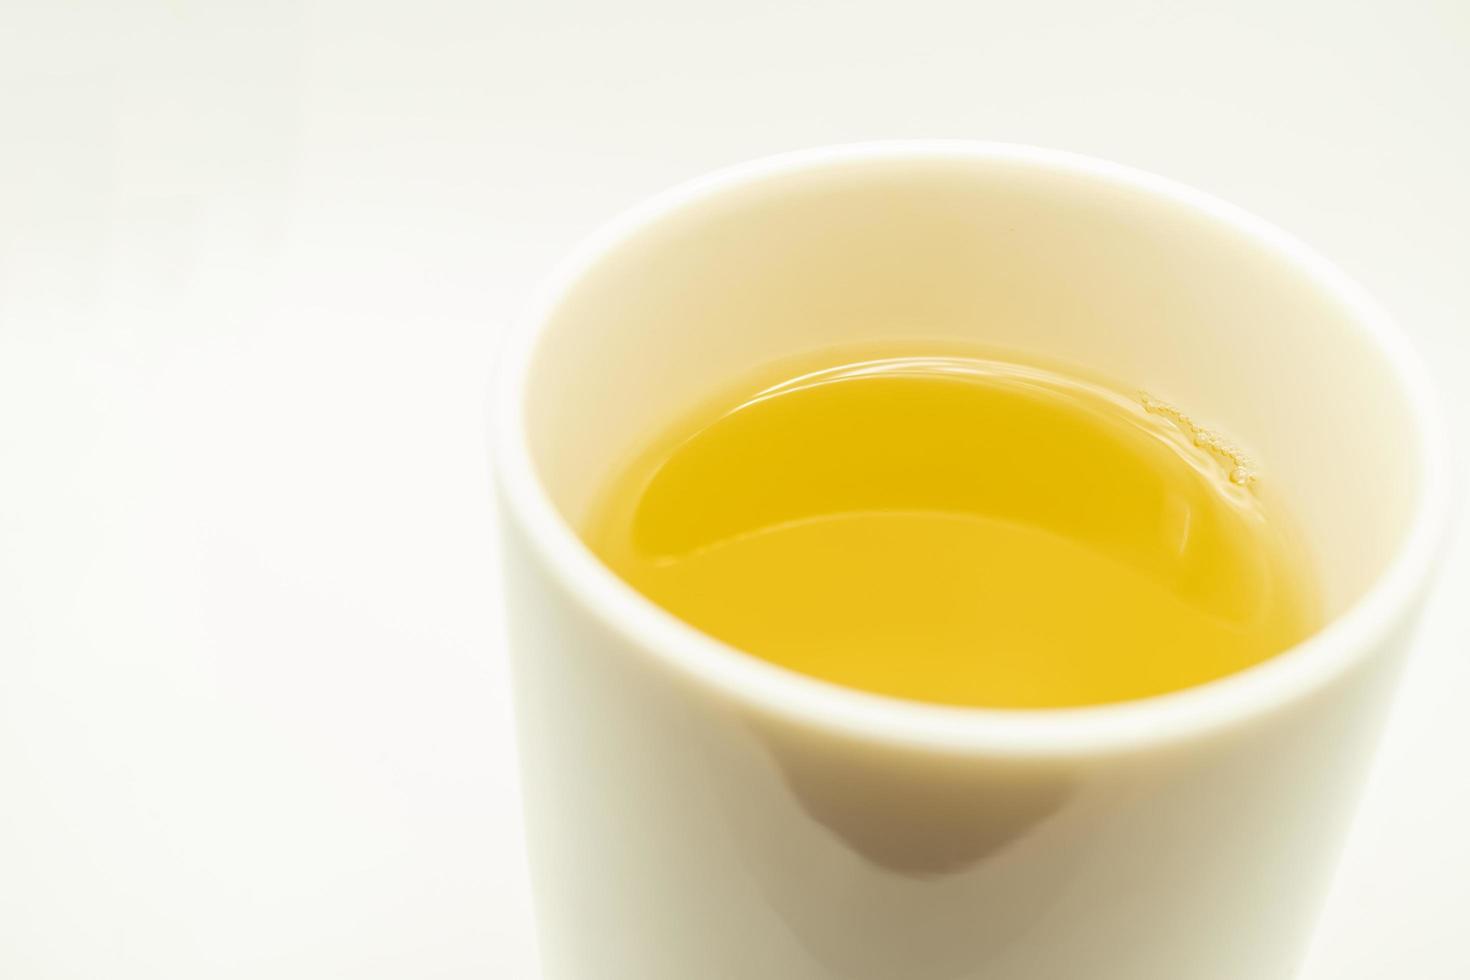 té verde sobre un fondo blanco. imagen de té verde japonés. taza de té aislado sobre fondo blanco foto